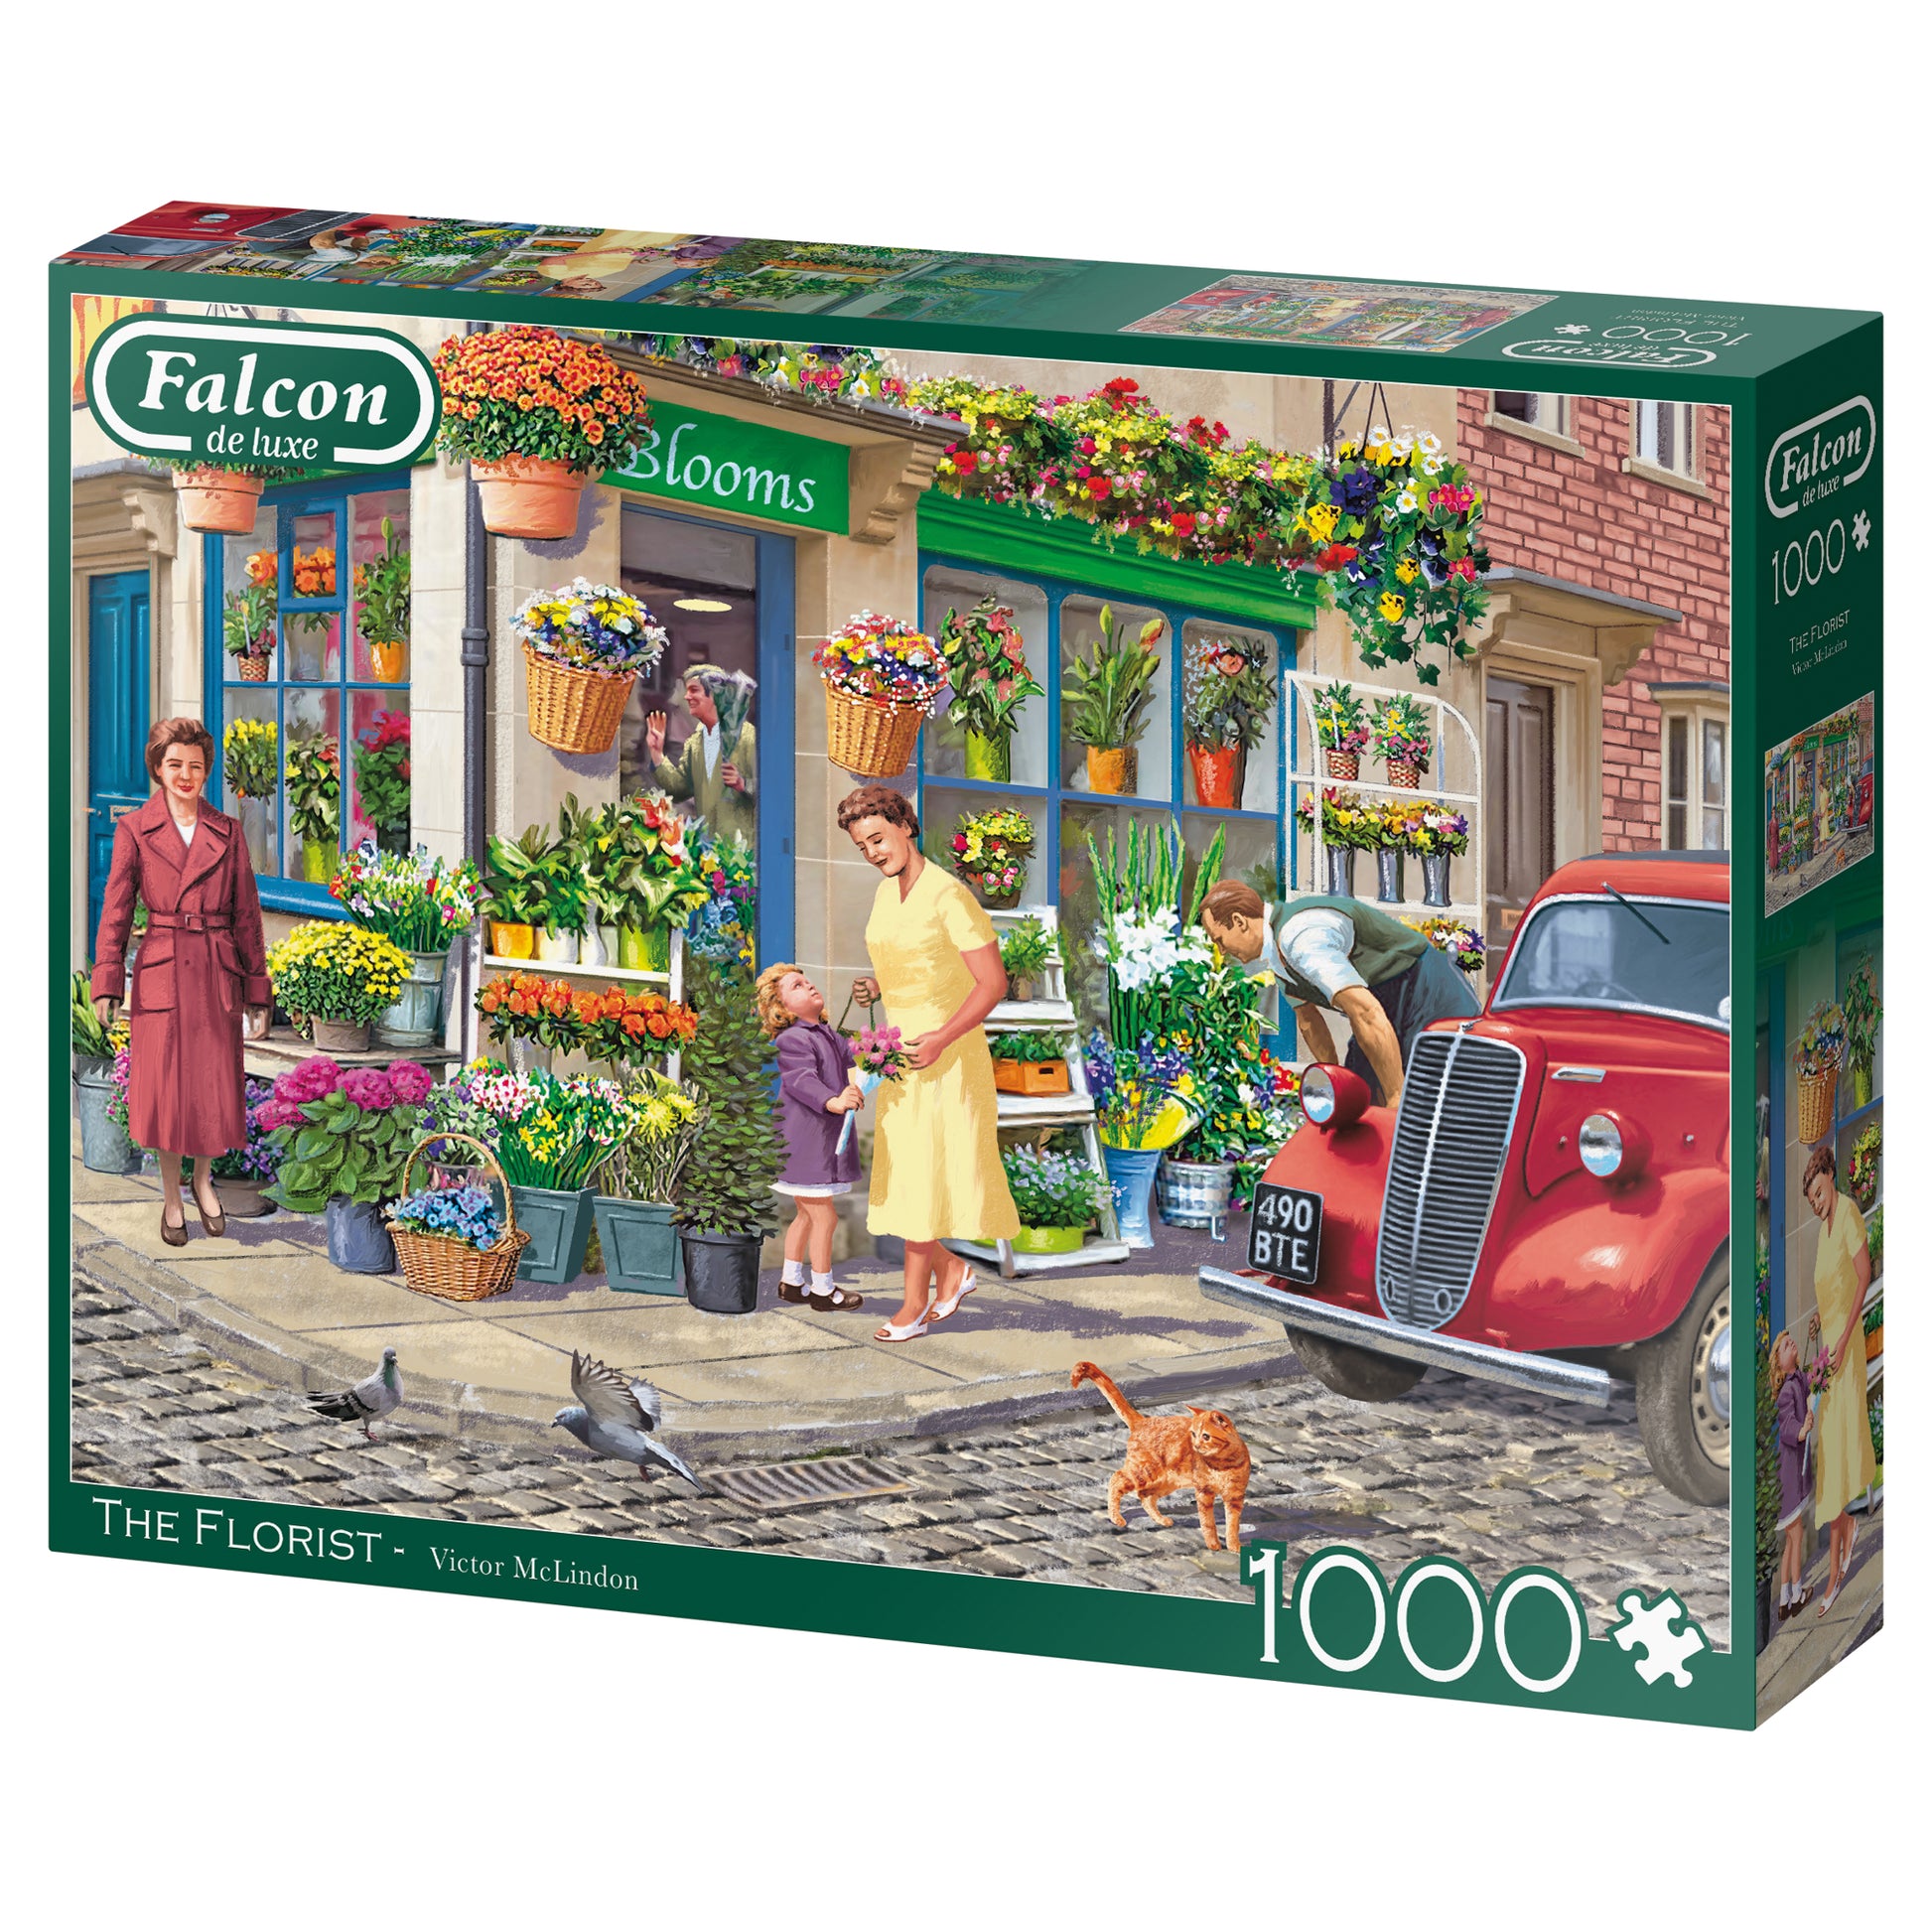 Falcon - The Florist (1000 pieces) - product image - Jumboplay.com